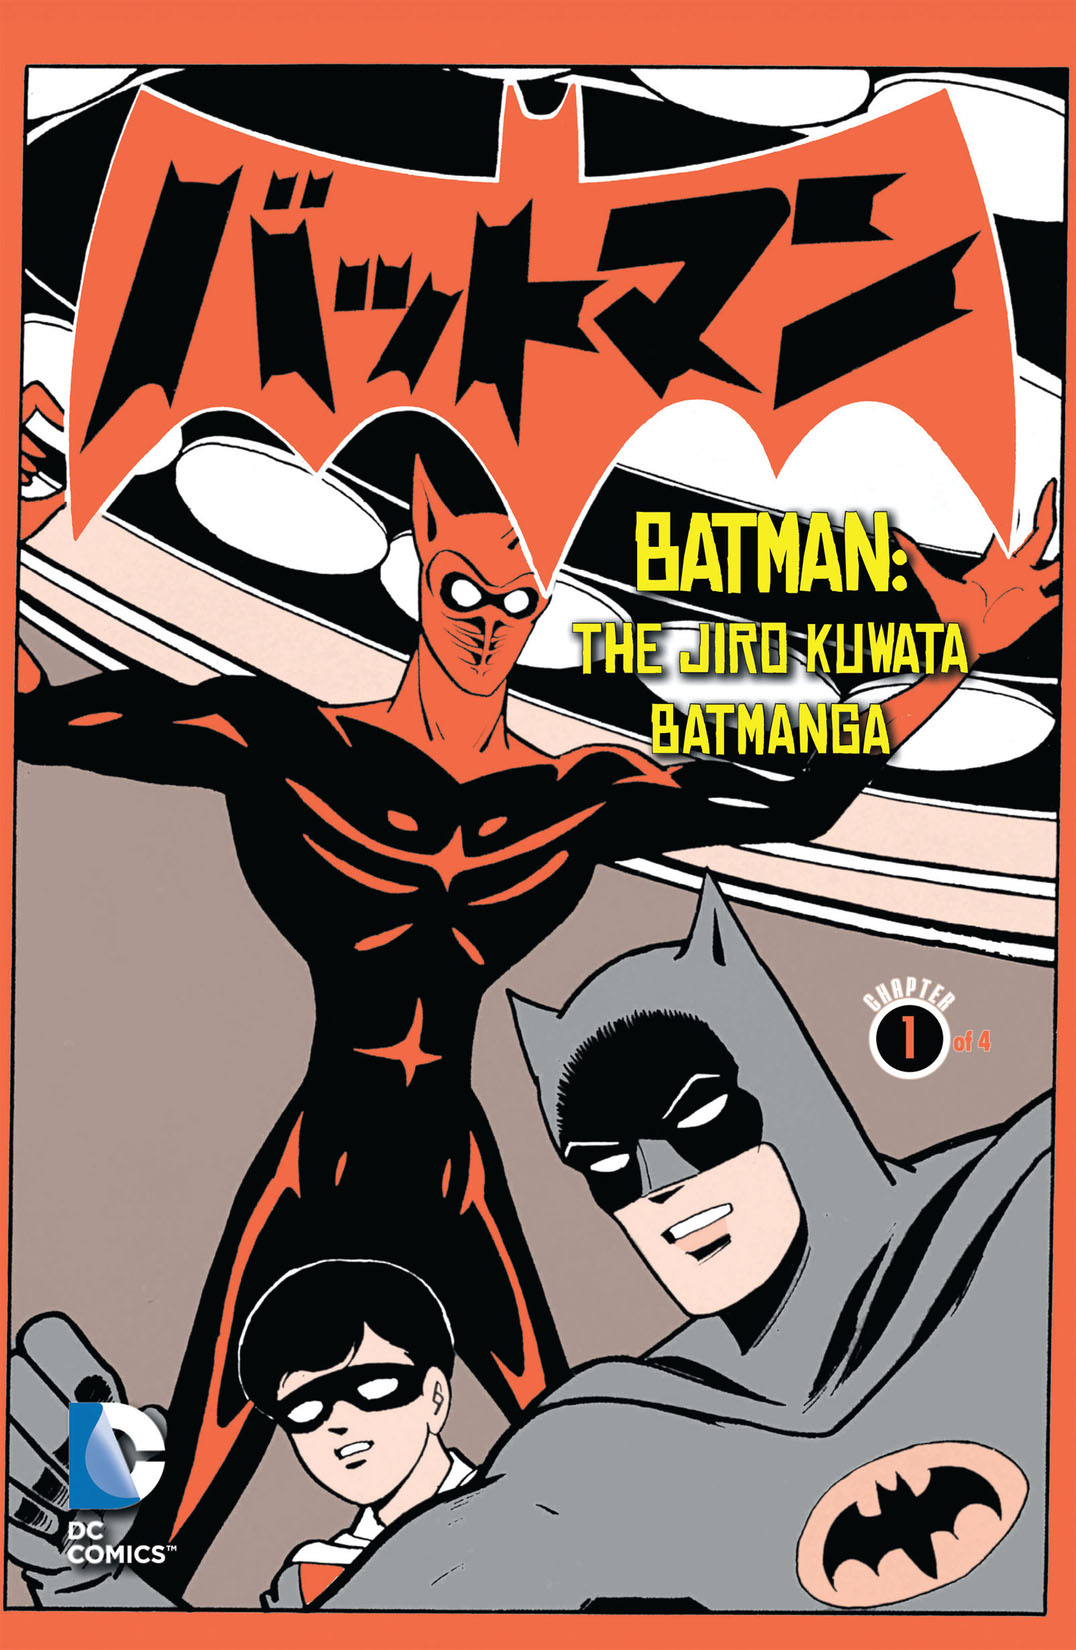 Batman: The Jiro Kuwata Batmanga #16 preview images